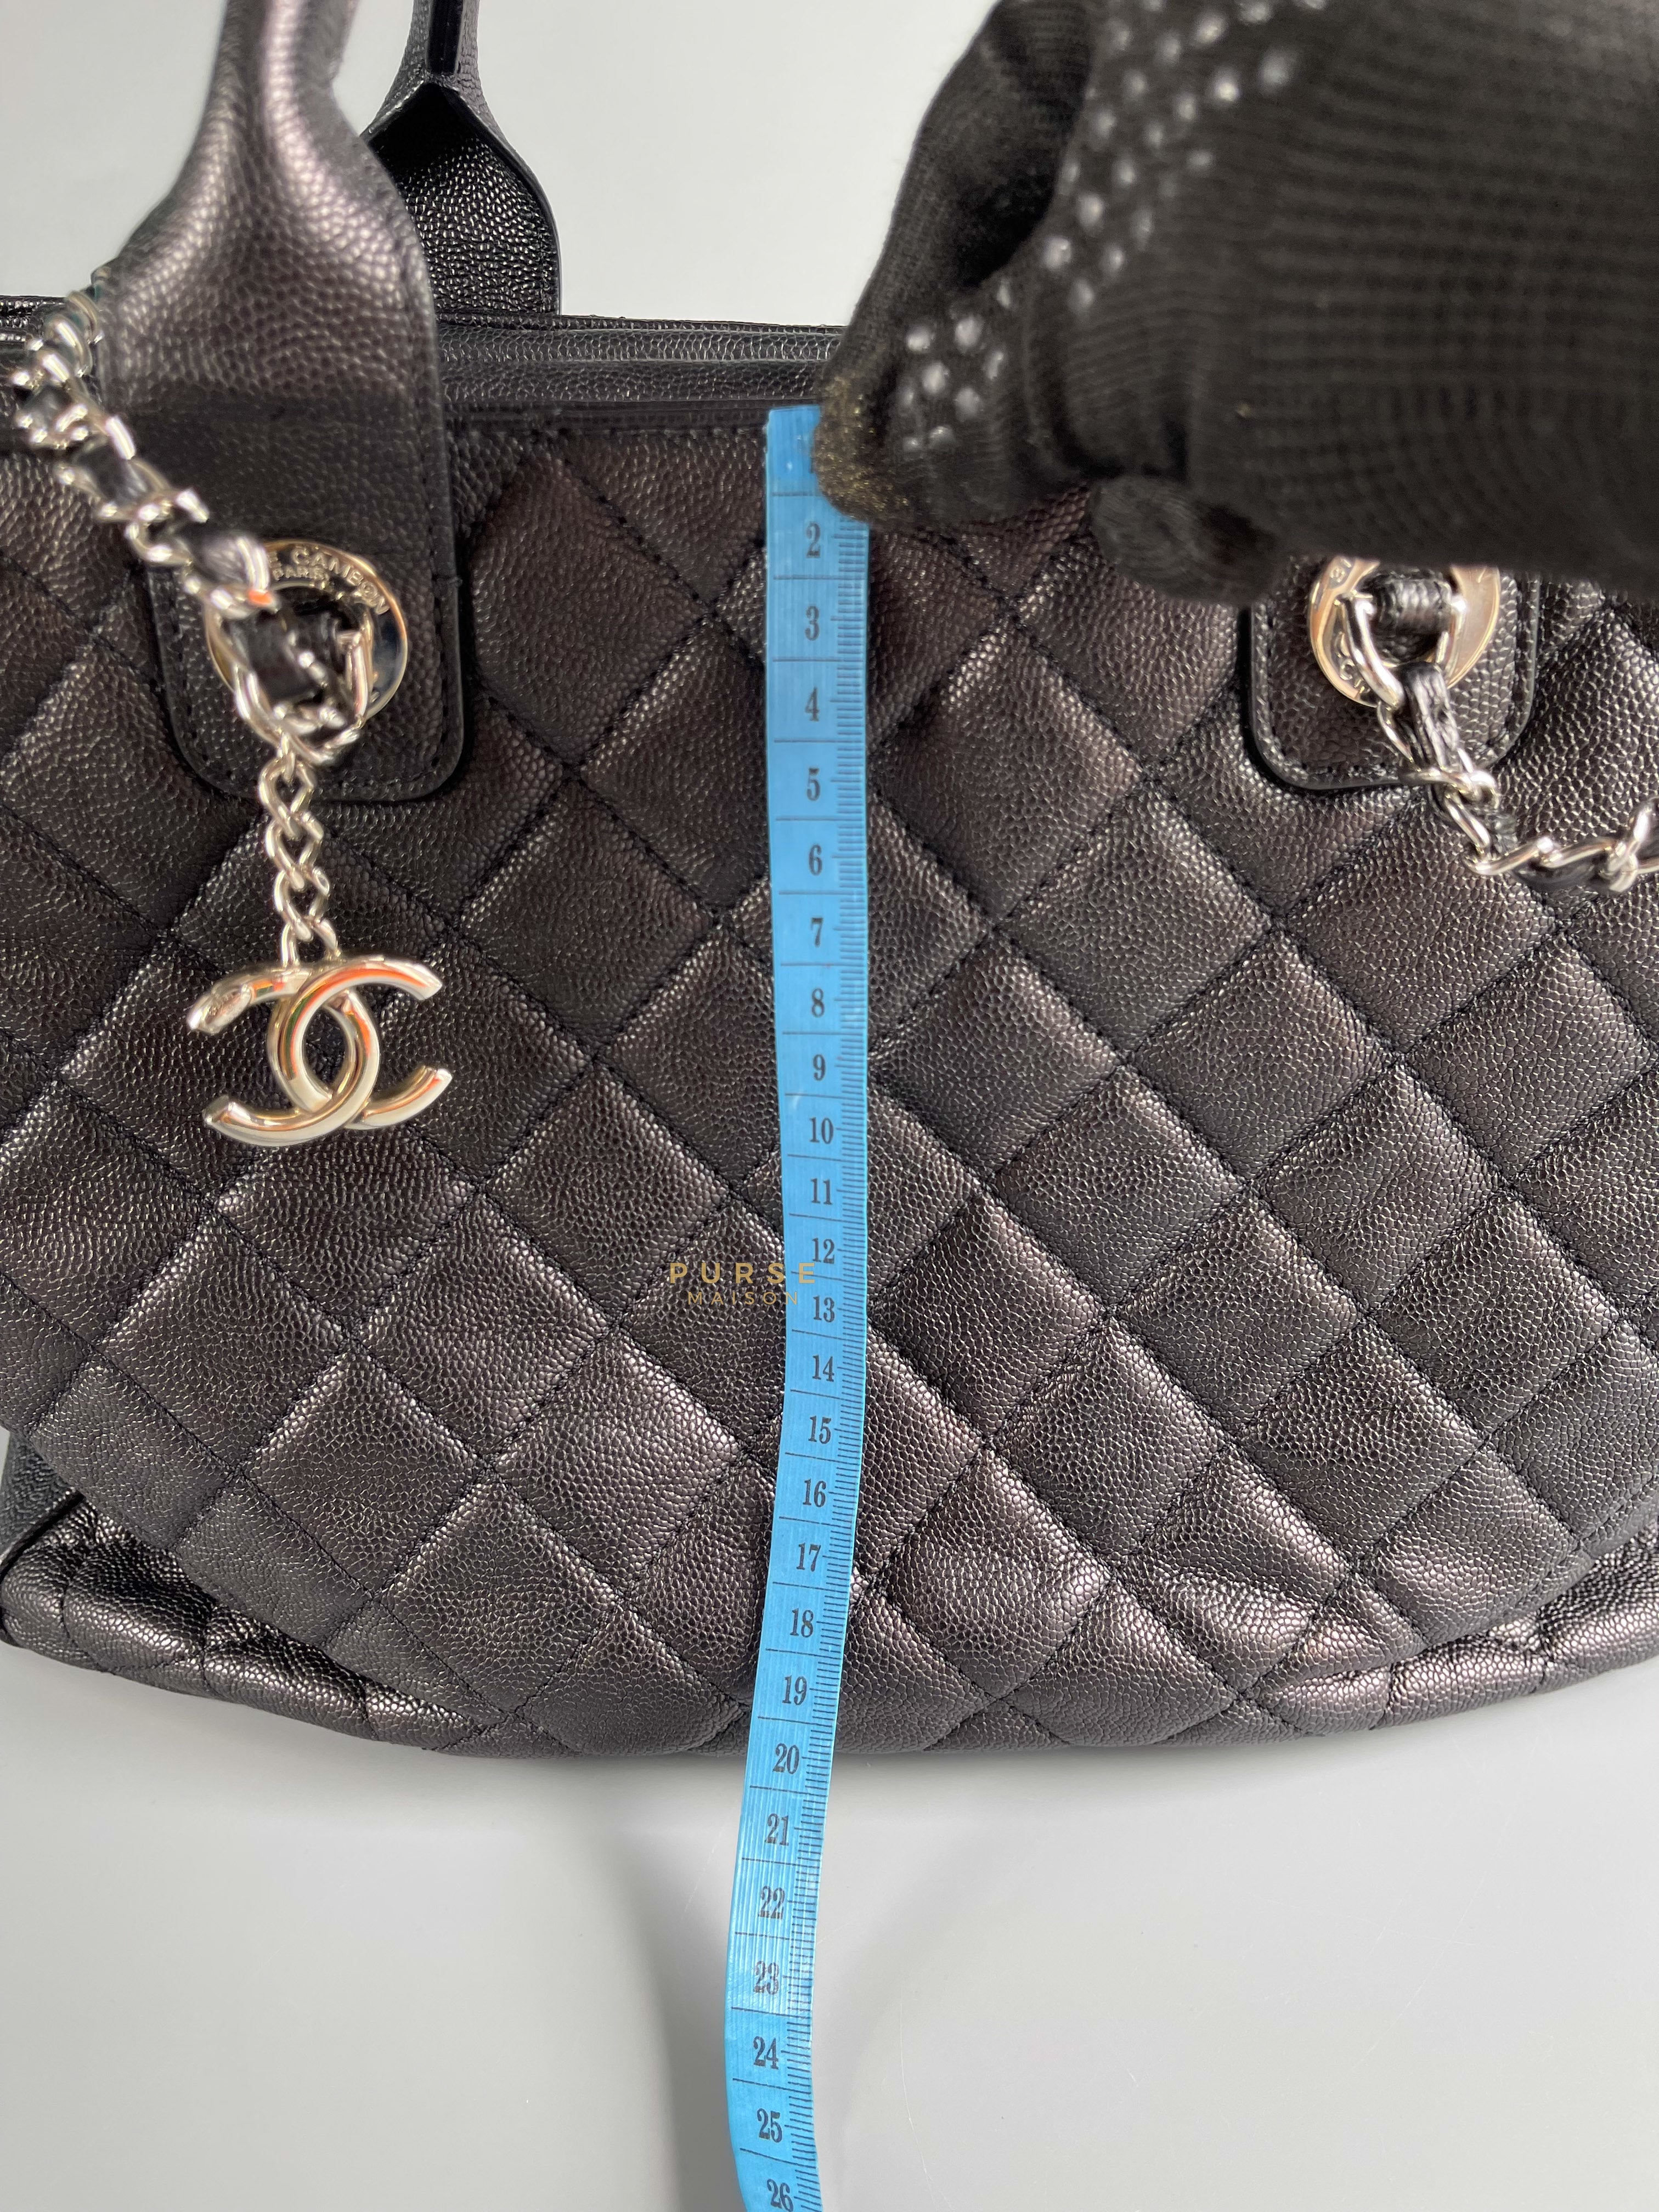 Chanel Urban Companion Top Handle in Black Caviar Canvas Tote Bag Series 25 | Purse Maison Luxury Bags Shop